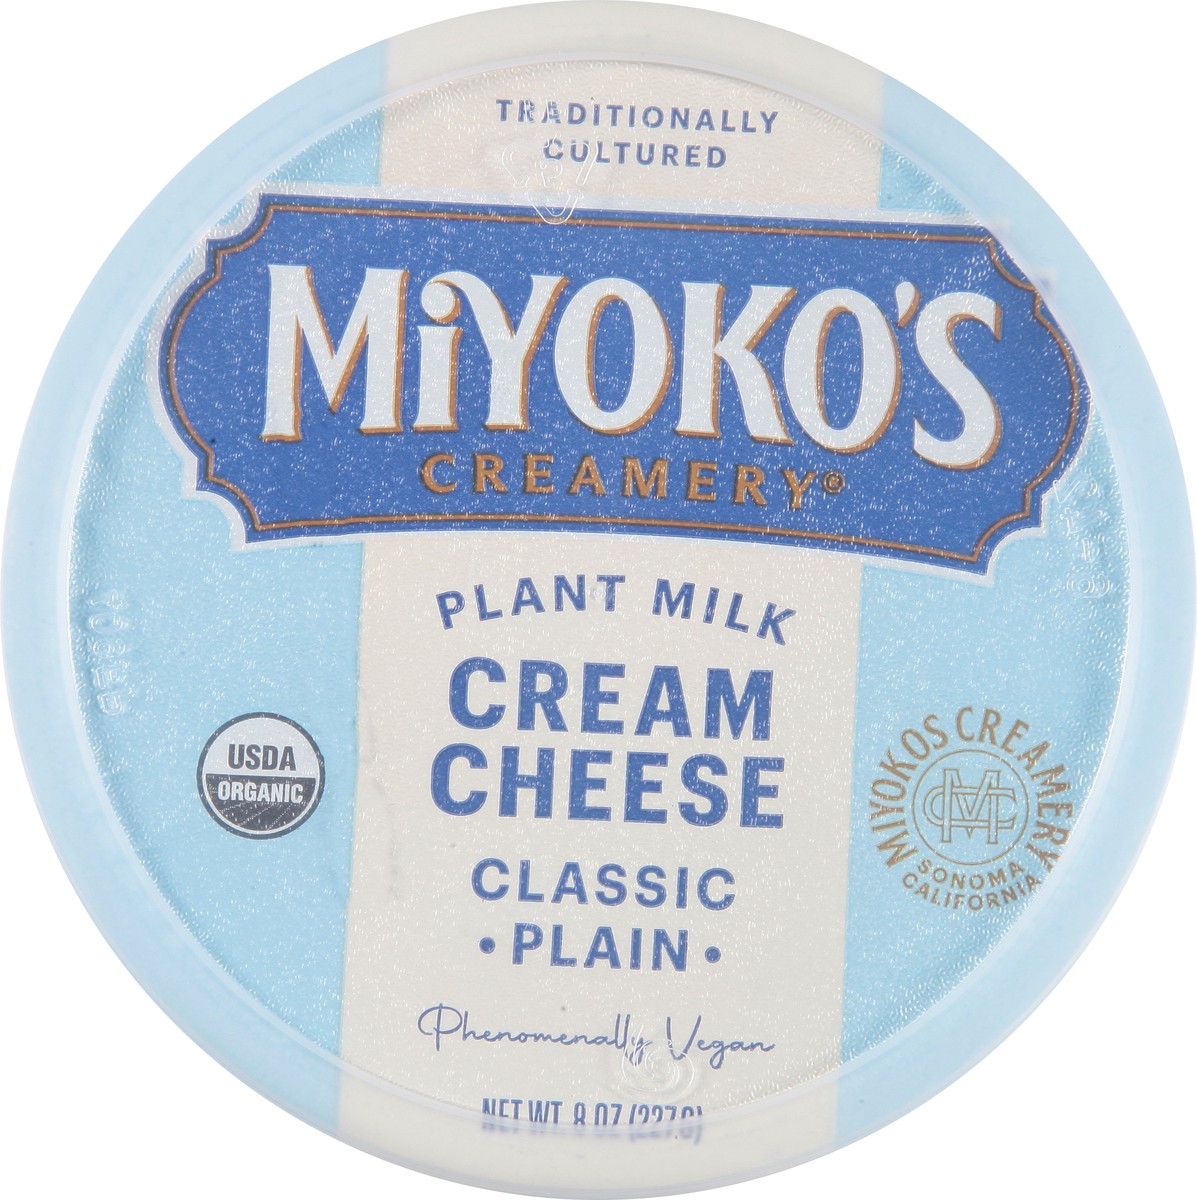 slide 9 of 9, Miyoko's Creamery Classic Plain Plant Milk Cream Cheese 8 oz, 8 oz